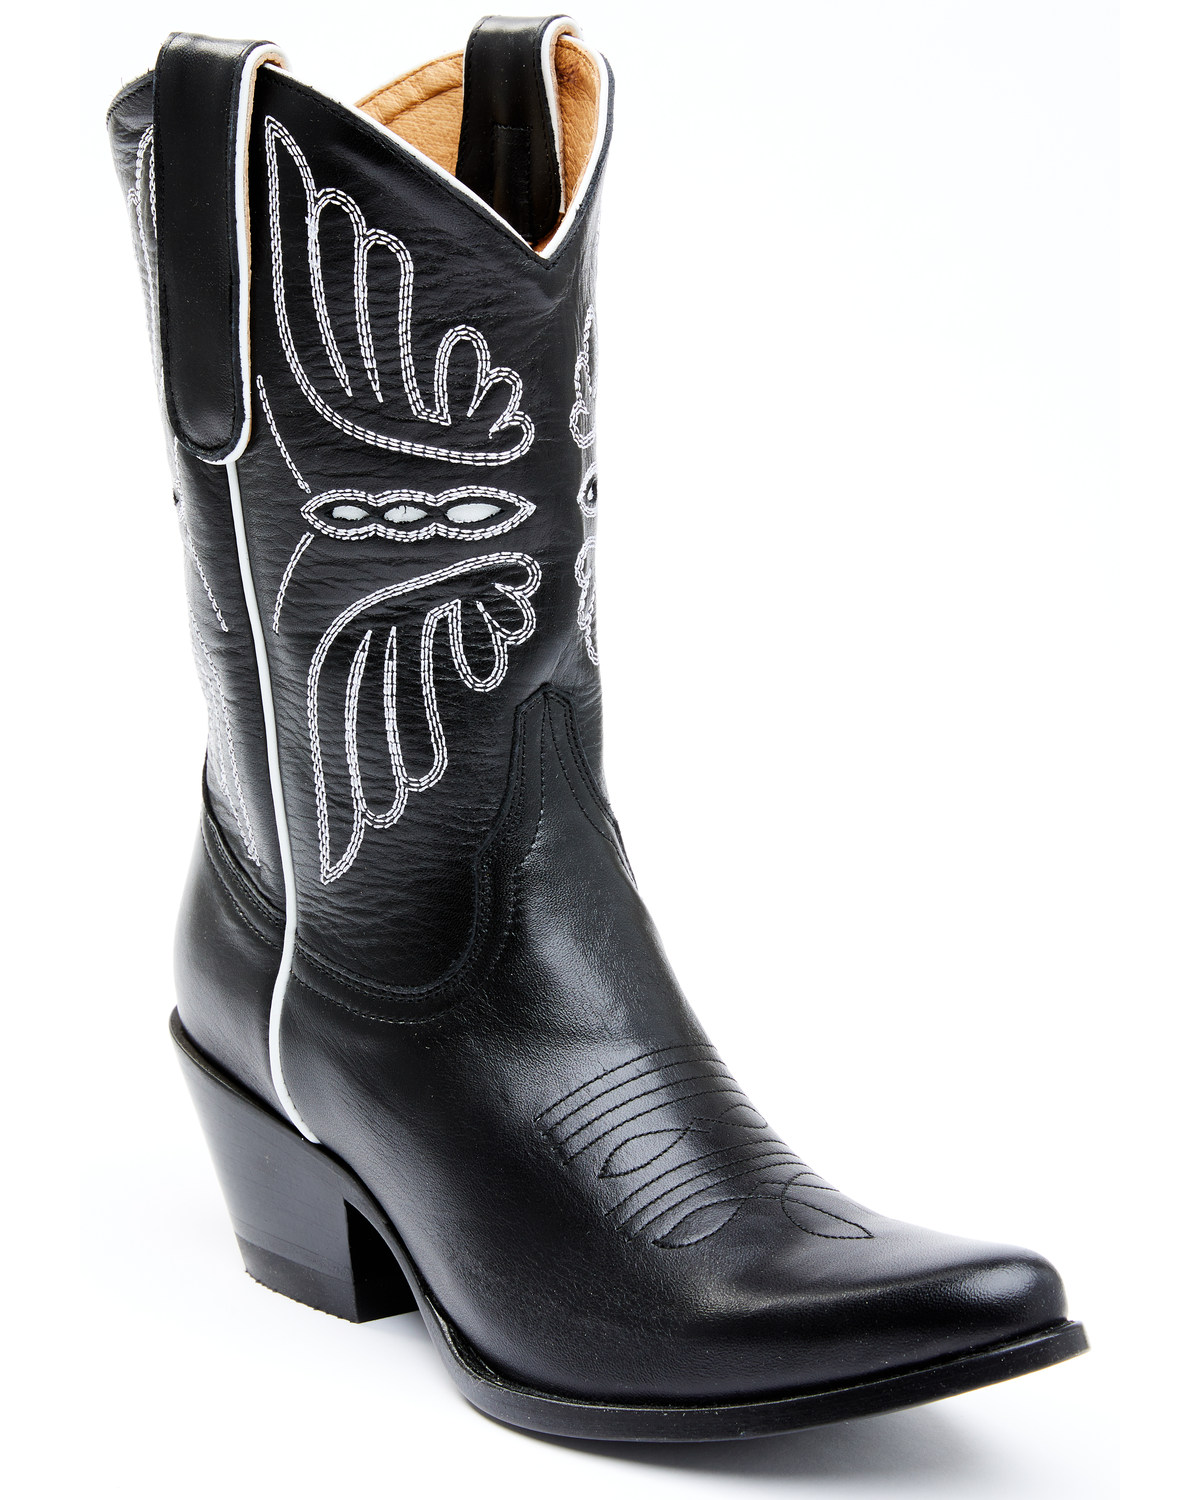 Idyllwind Women's Ace Western Boots